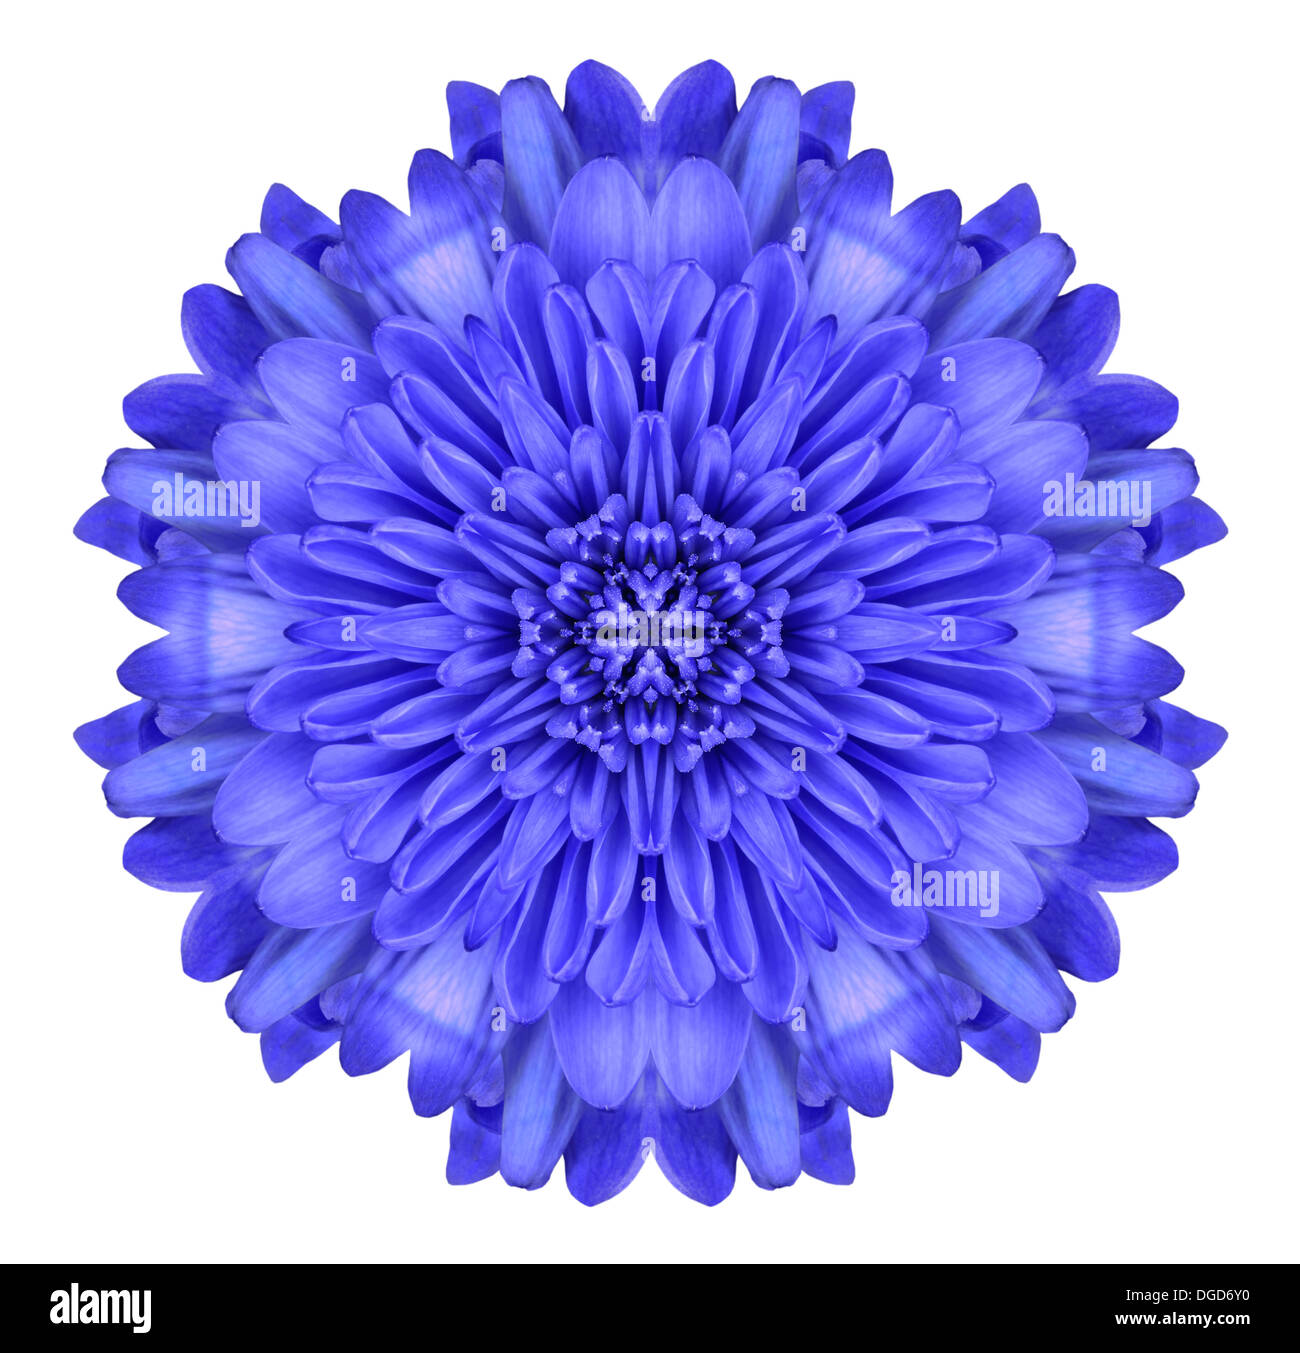 Blaue Mandala Chrysantheme Blume Kaleidoskop, Isolated on White Background Stockfoto